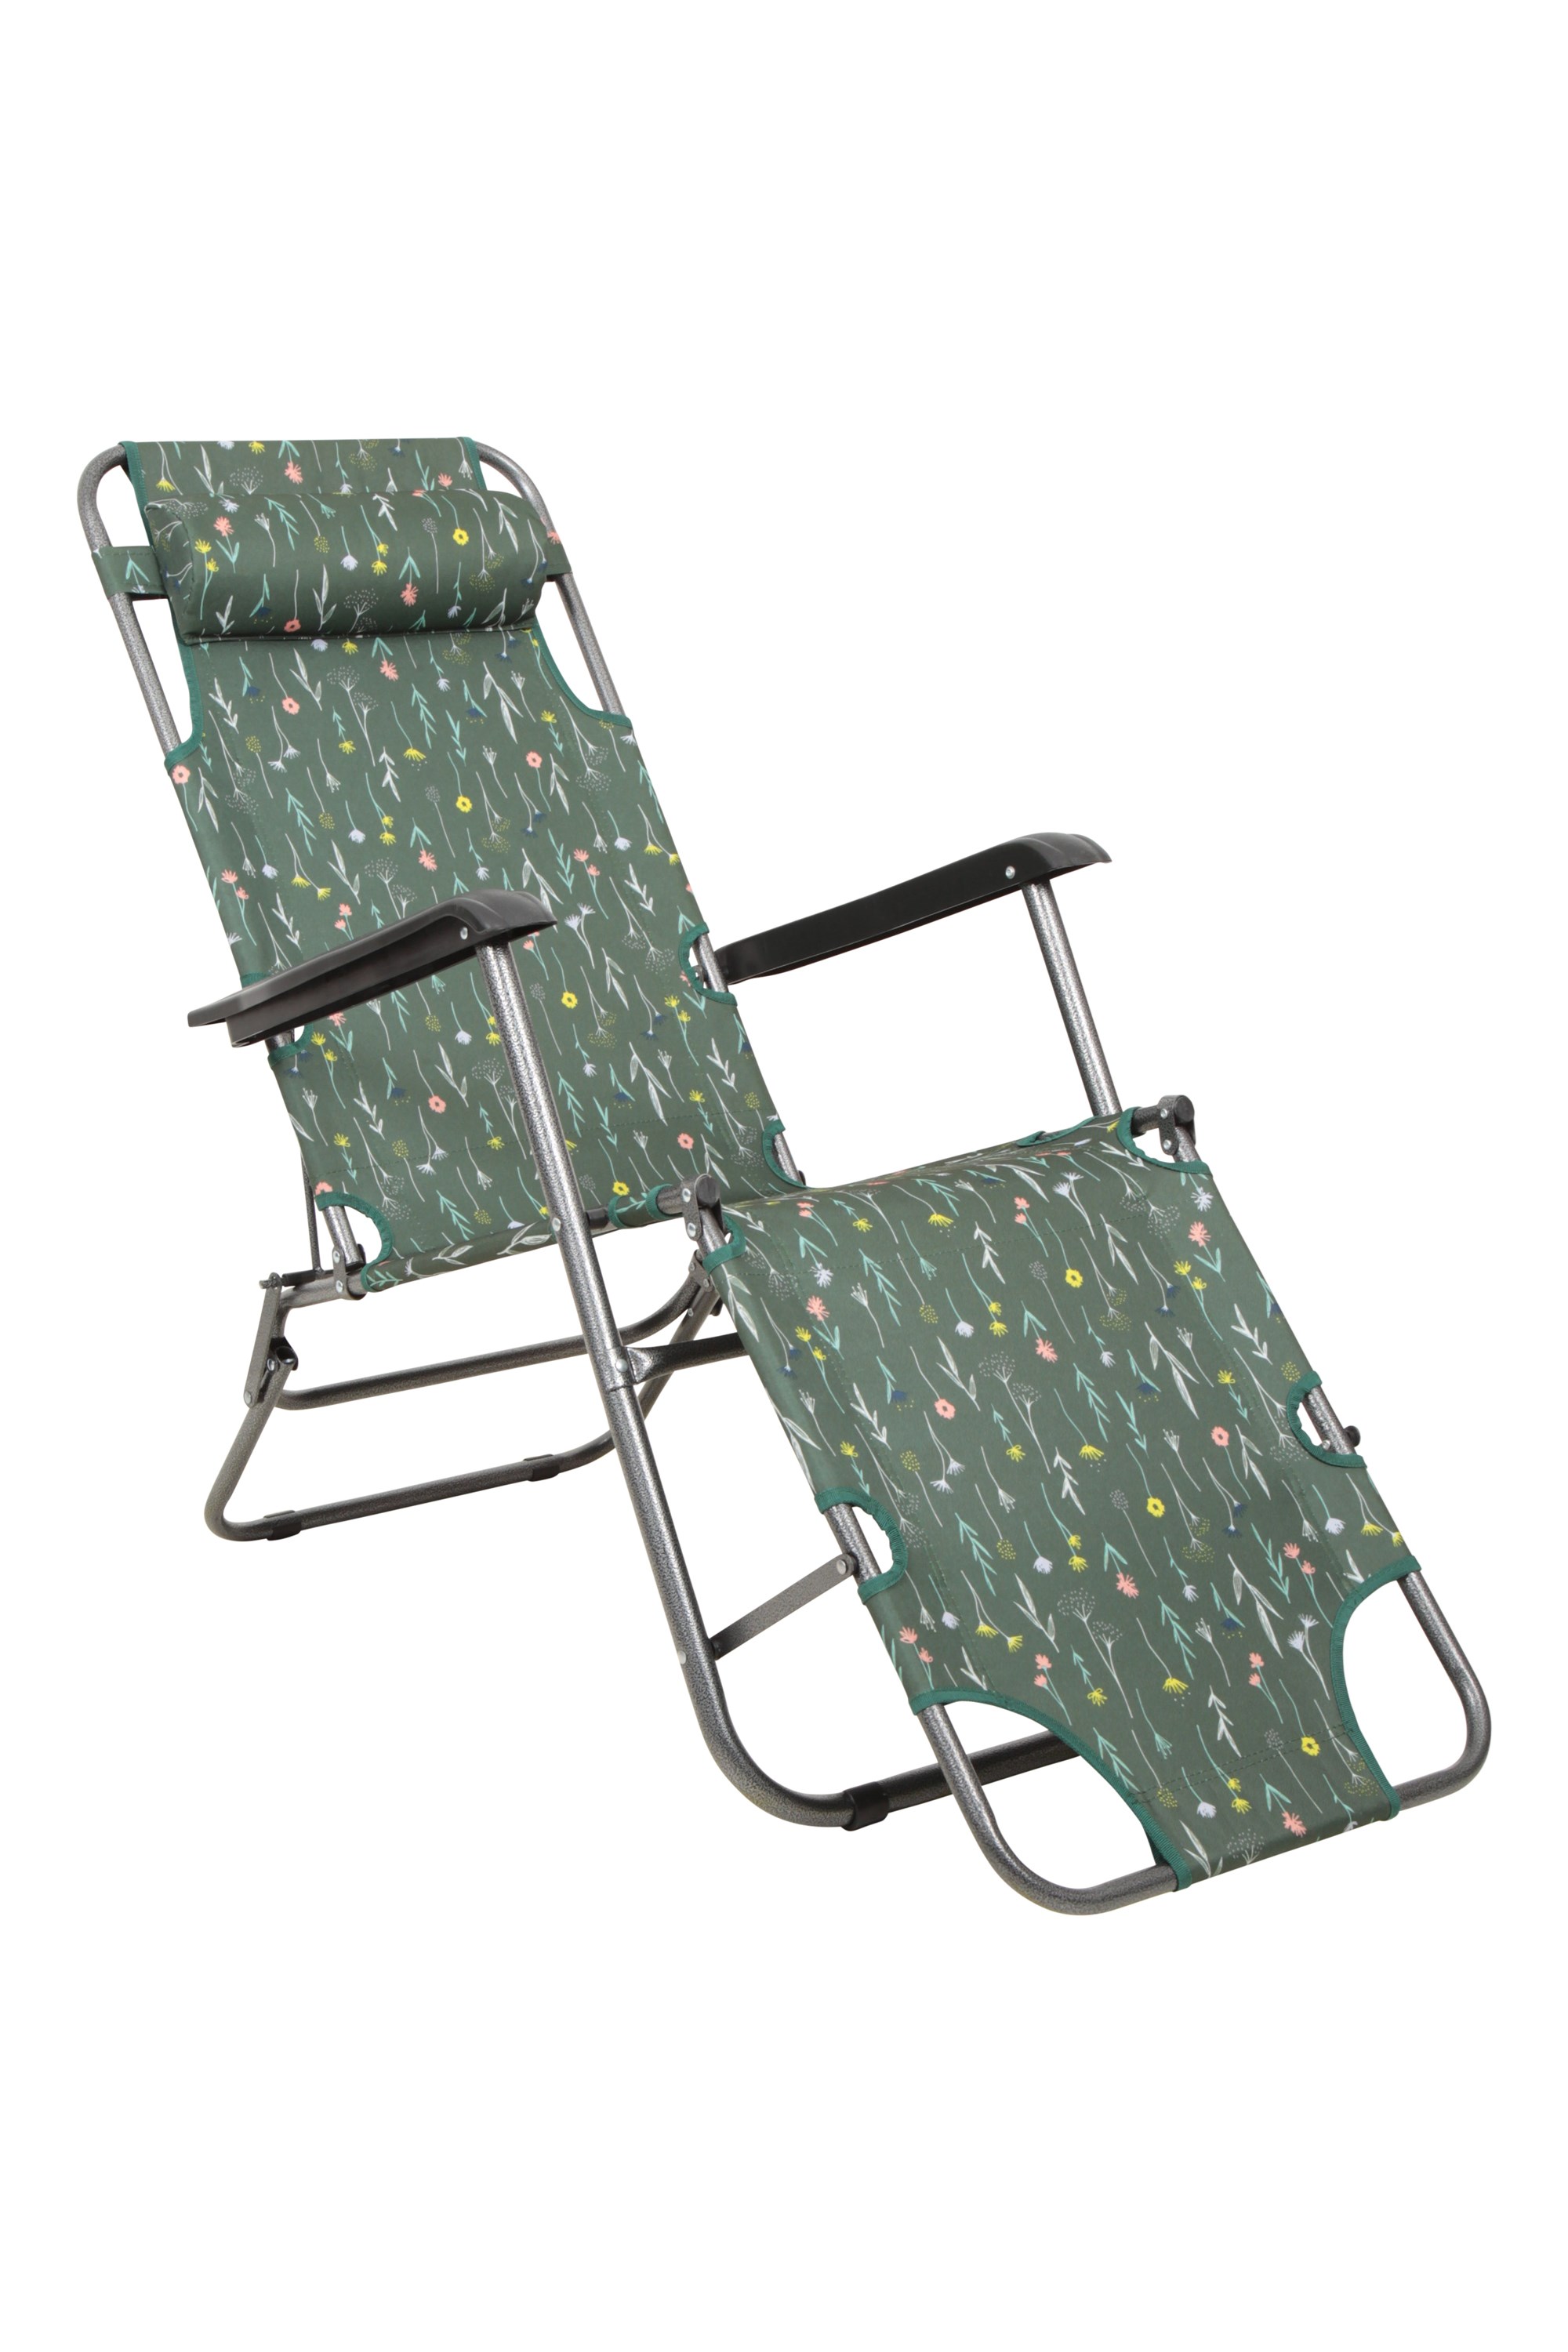 Mountain Warehouse Sunlounger Folding Chair Foldable Camping Fishing Pool Lounge 